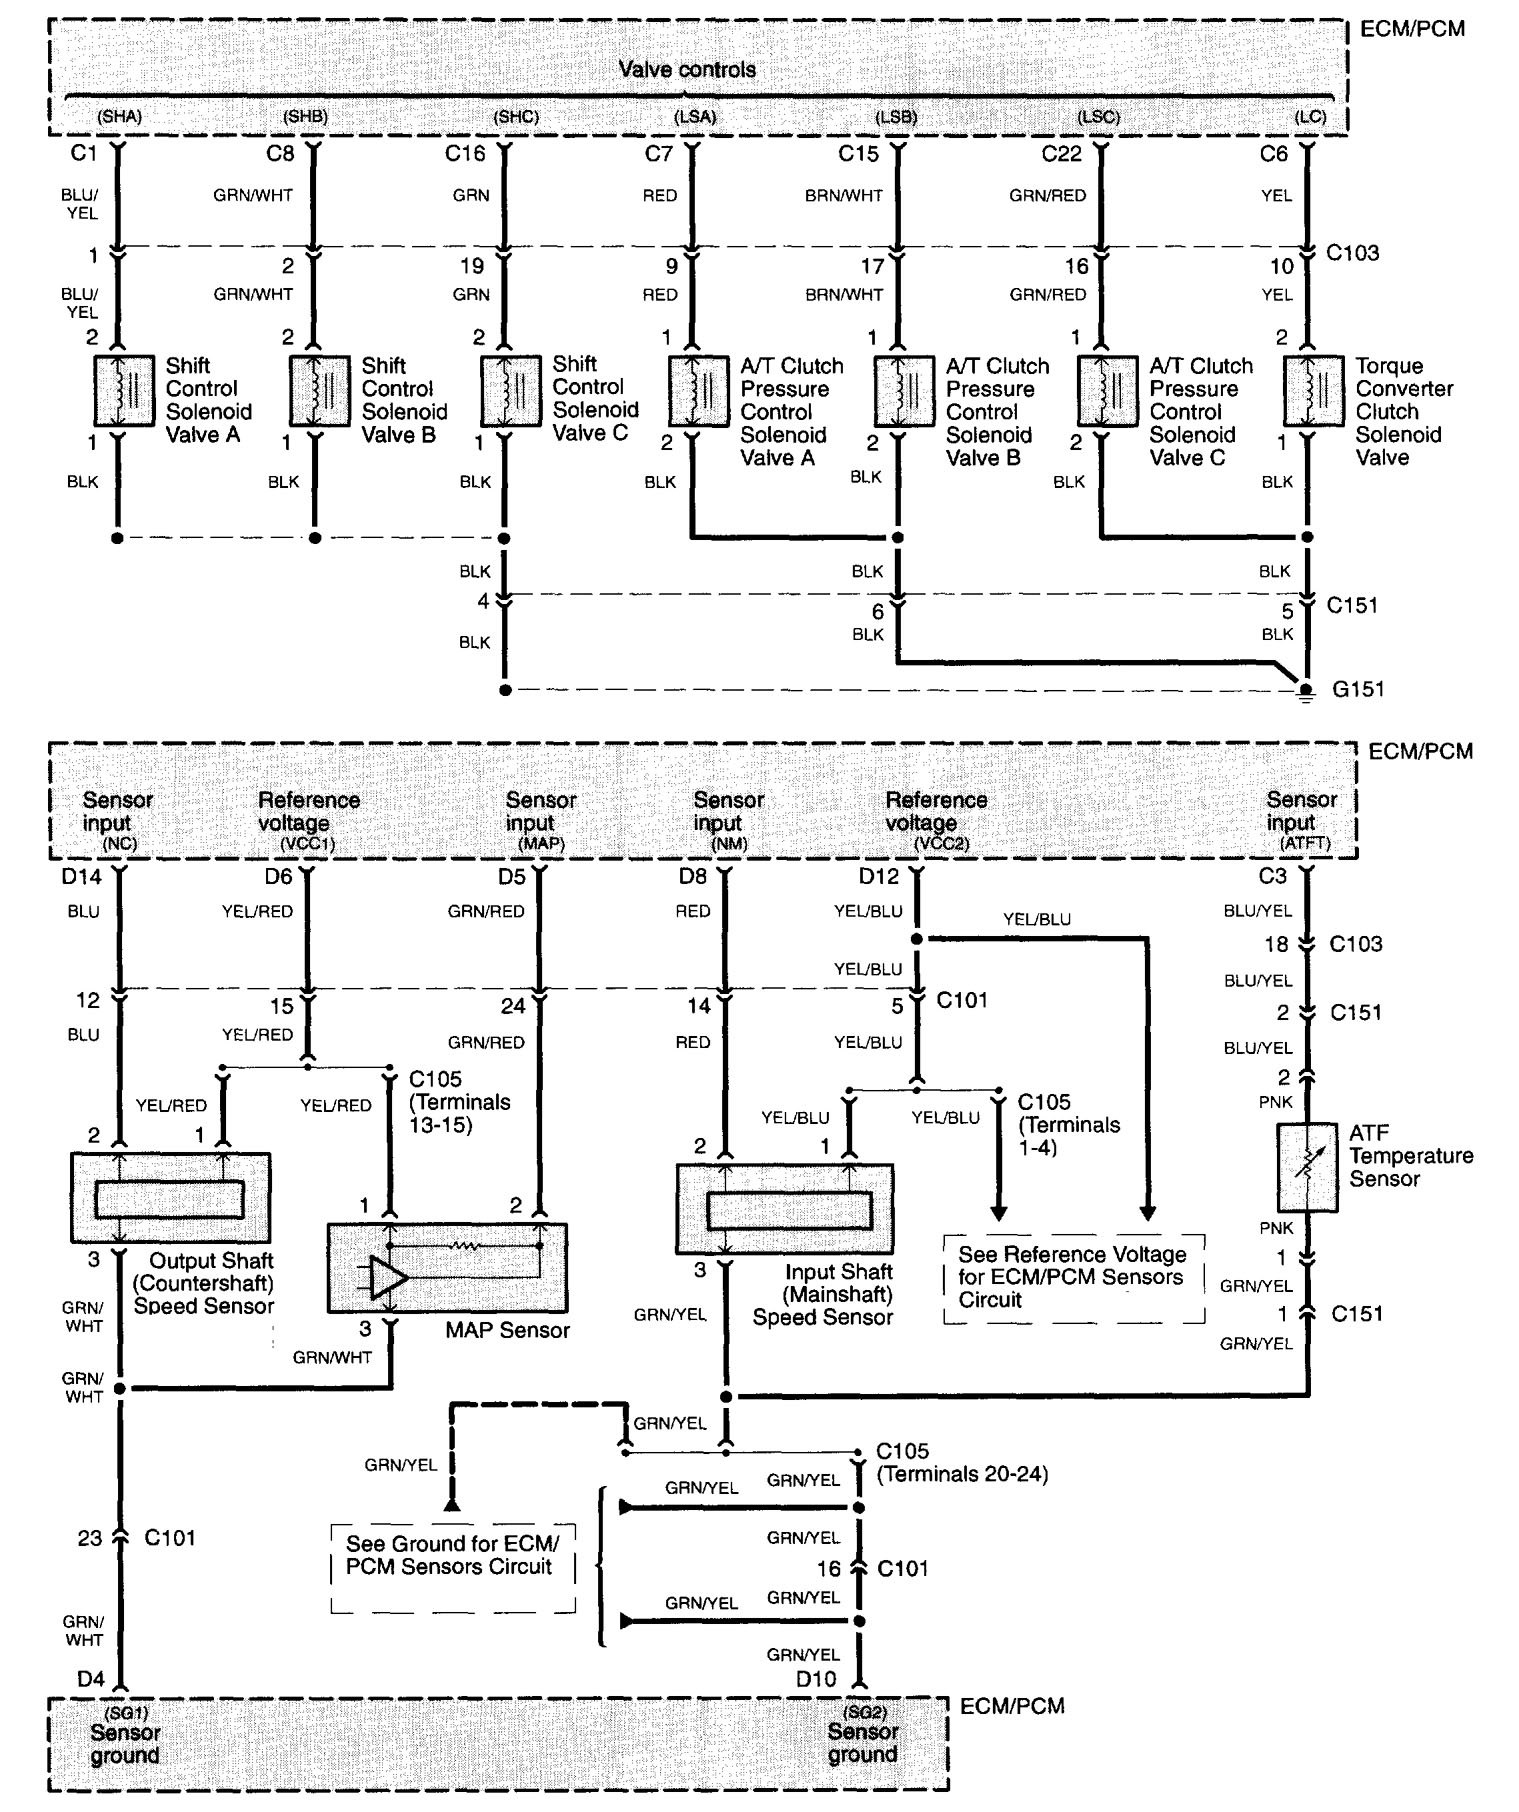 2004 Acura Tl Wiring Diagram - Cars Wiring Diagram